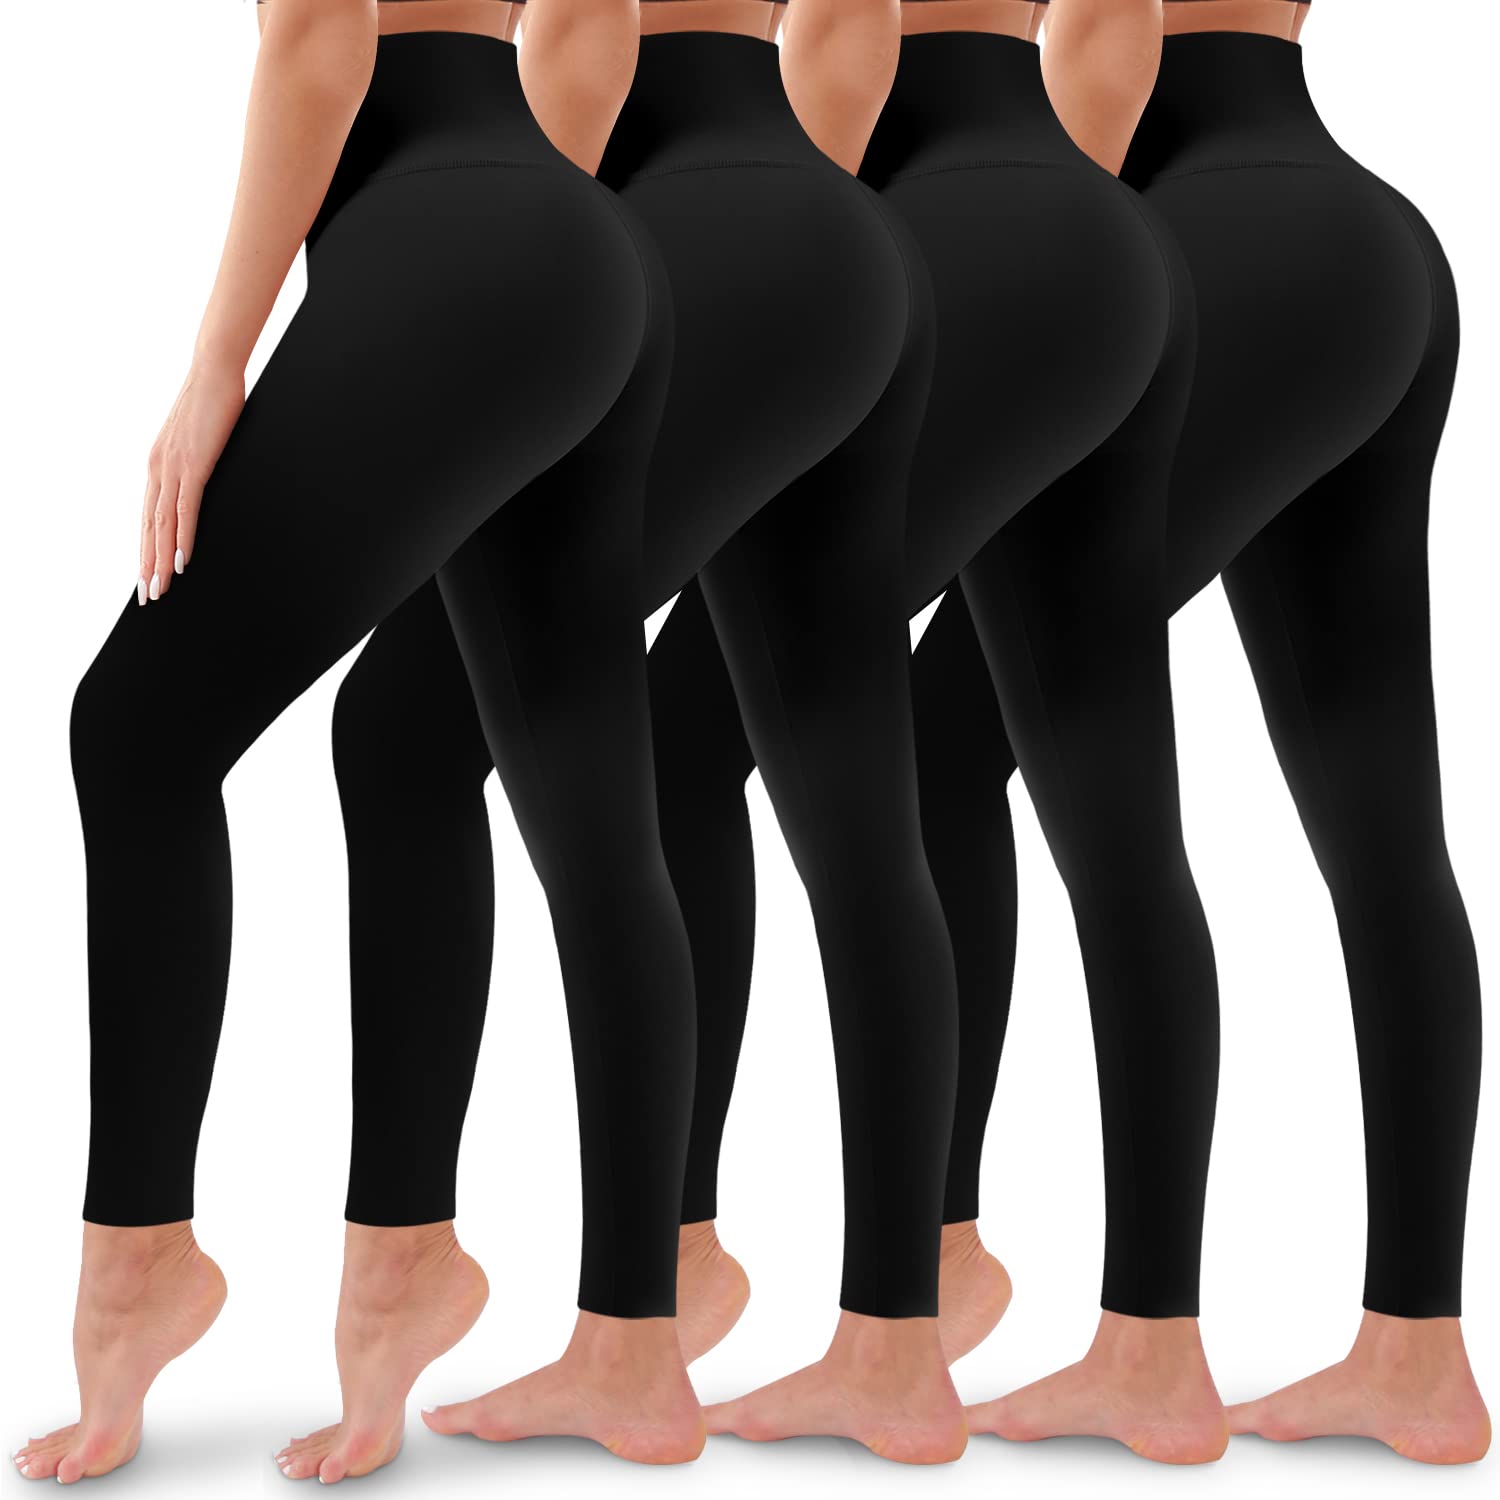 Womens Silky See Through Leggings High Elastic Sheer Ultra-thin